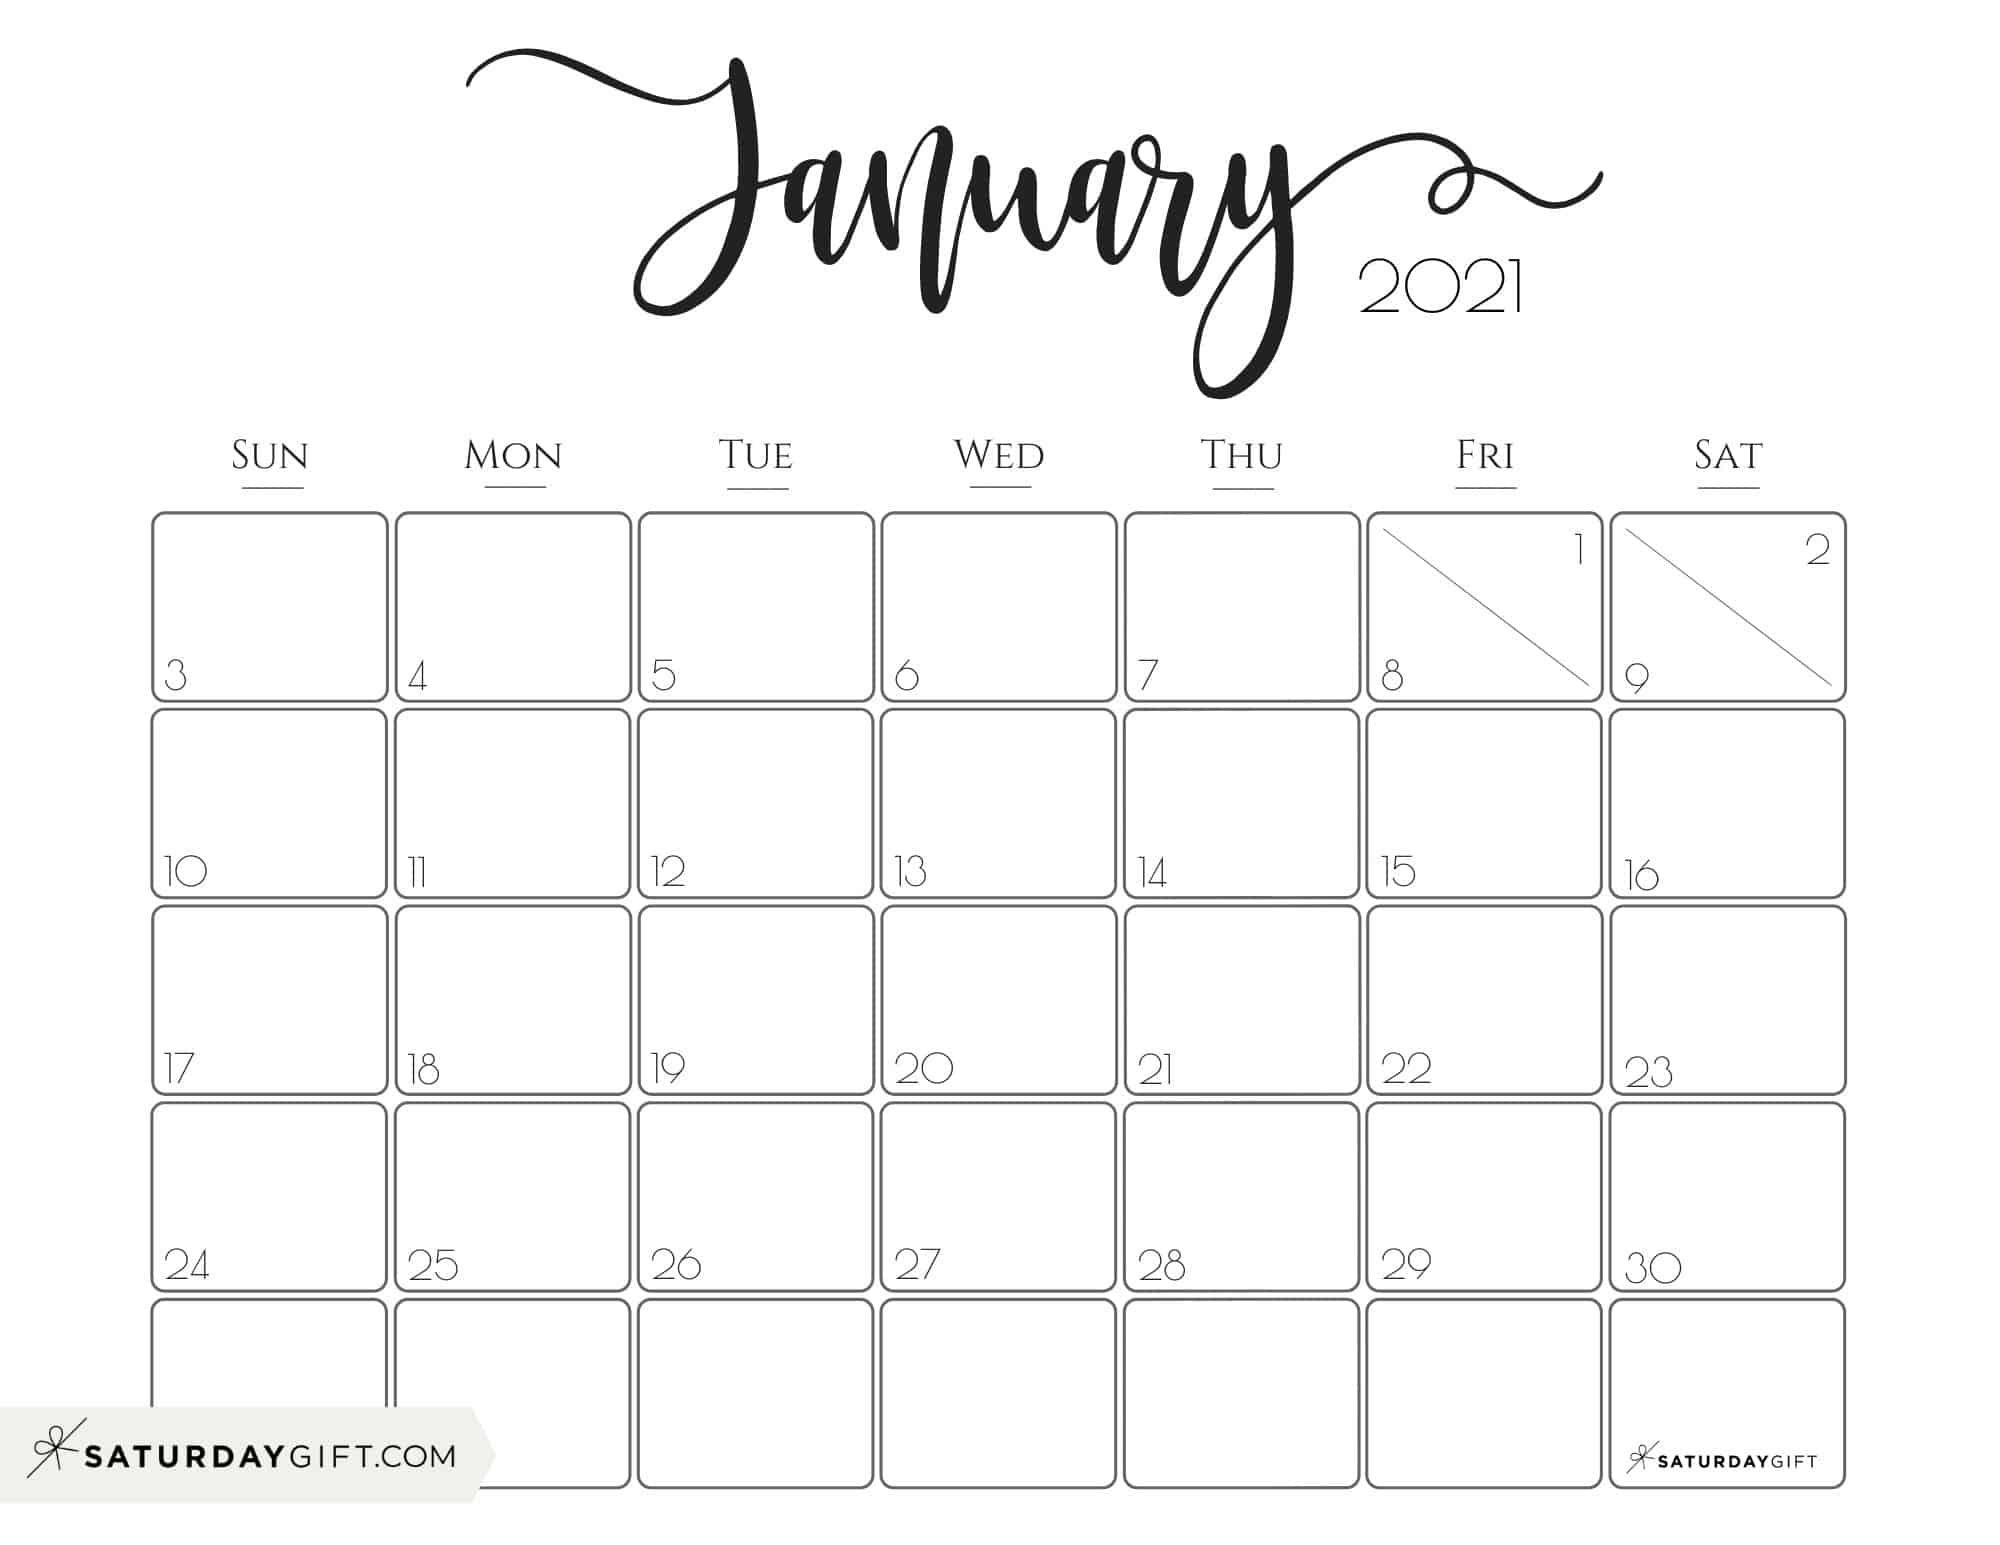 20+ January 2021 Calendar - Free Download Printable Calendar Templates ️ December 2020 January 2021 Calendar Nz